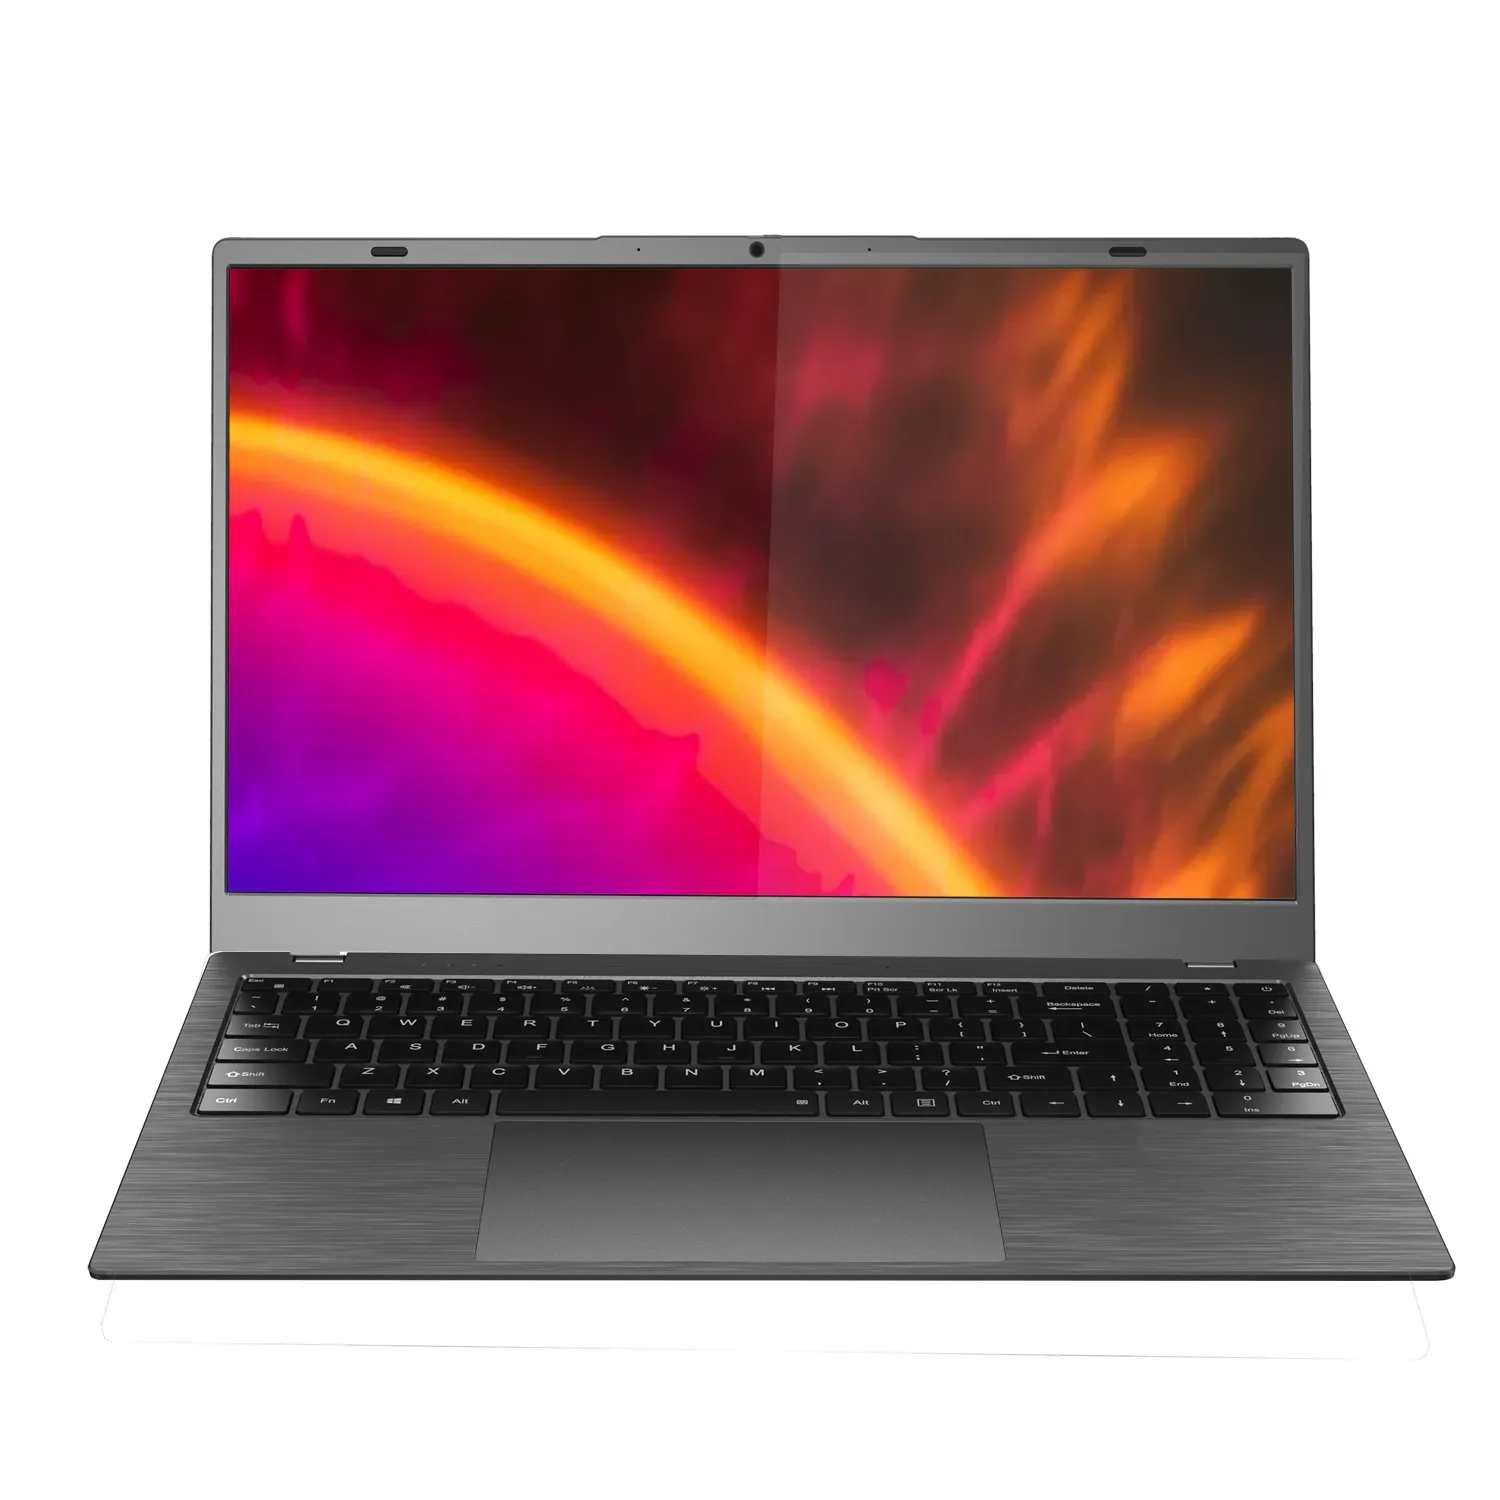 नई अनुकूलित 15.6 इंच के लैपटॉप नोटबुक 12th N95 शिक्षा लैपटॉप 12GB रैम 1TB SSD हार्डवेयर नोटबुक पोर्टेबल पीसी कंप्यूटर